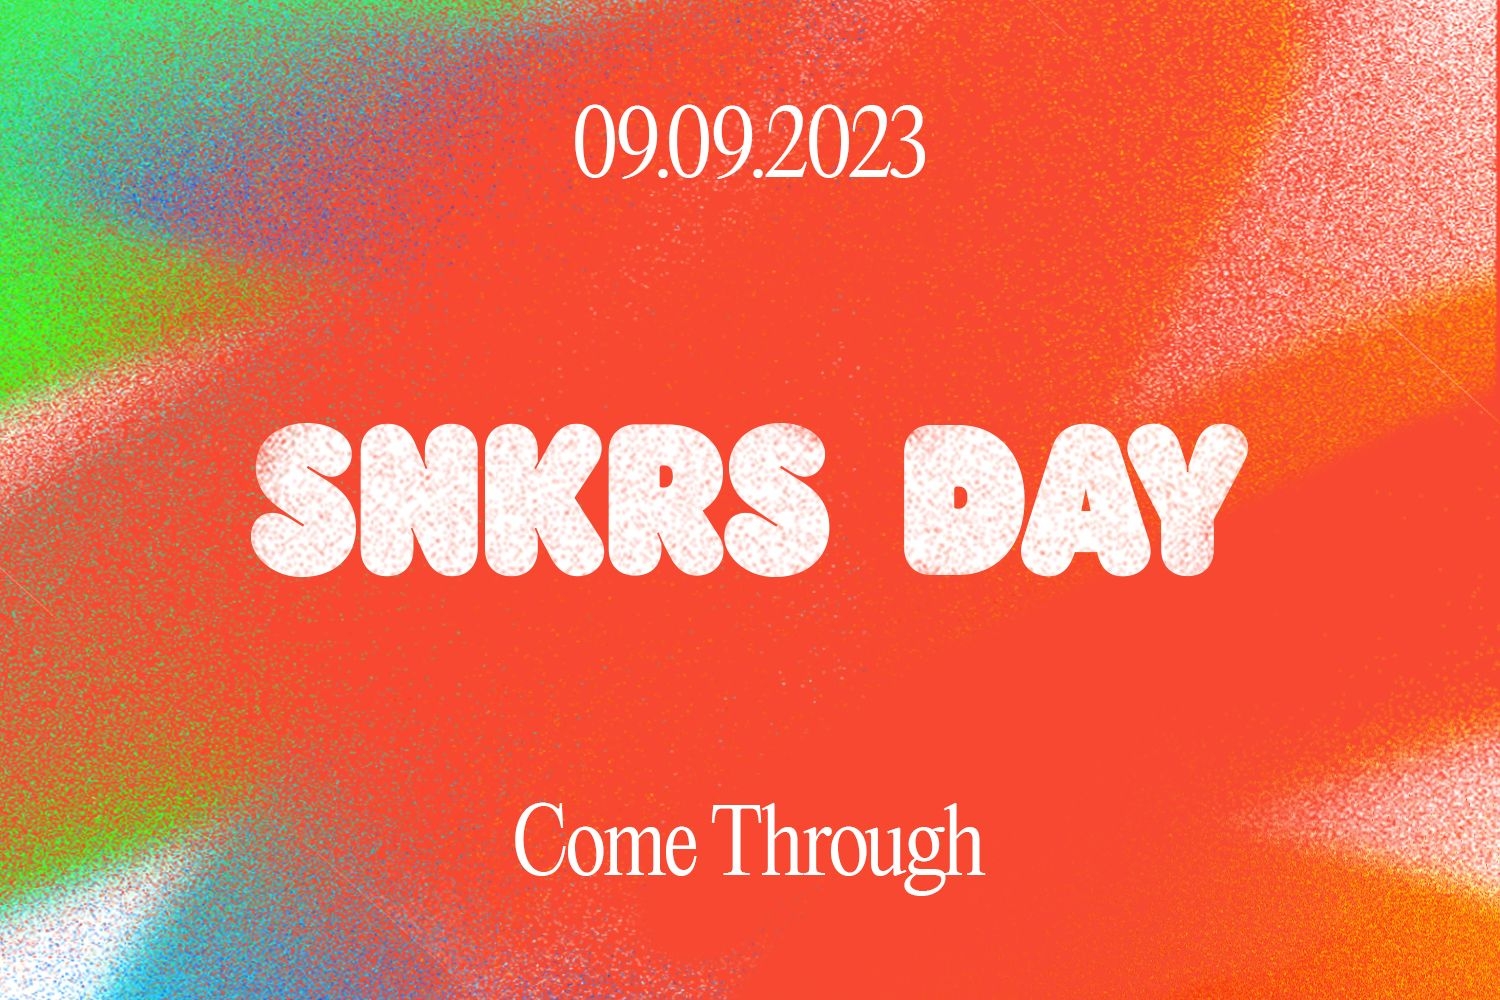 Der Nike SNKRS Day 2023 steht bevor